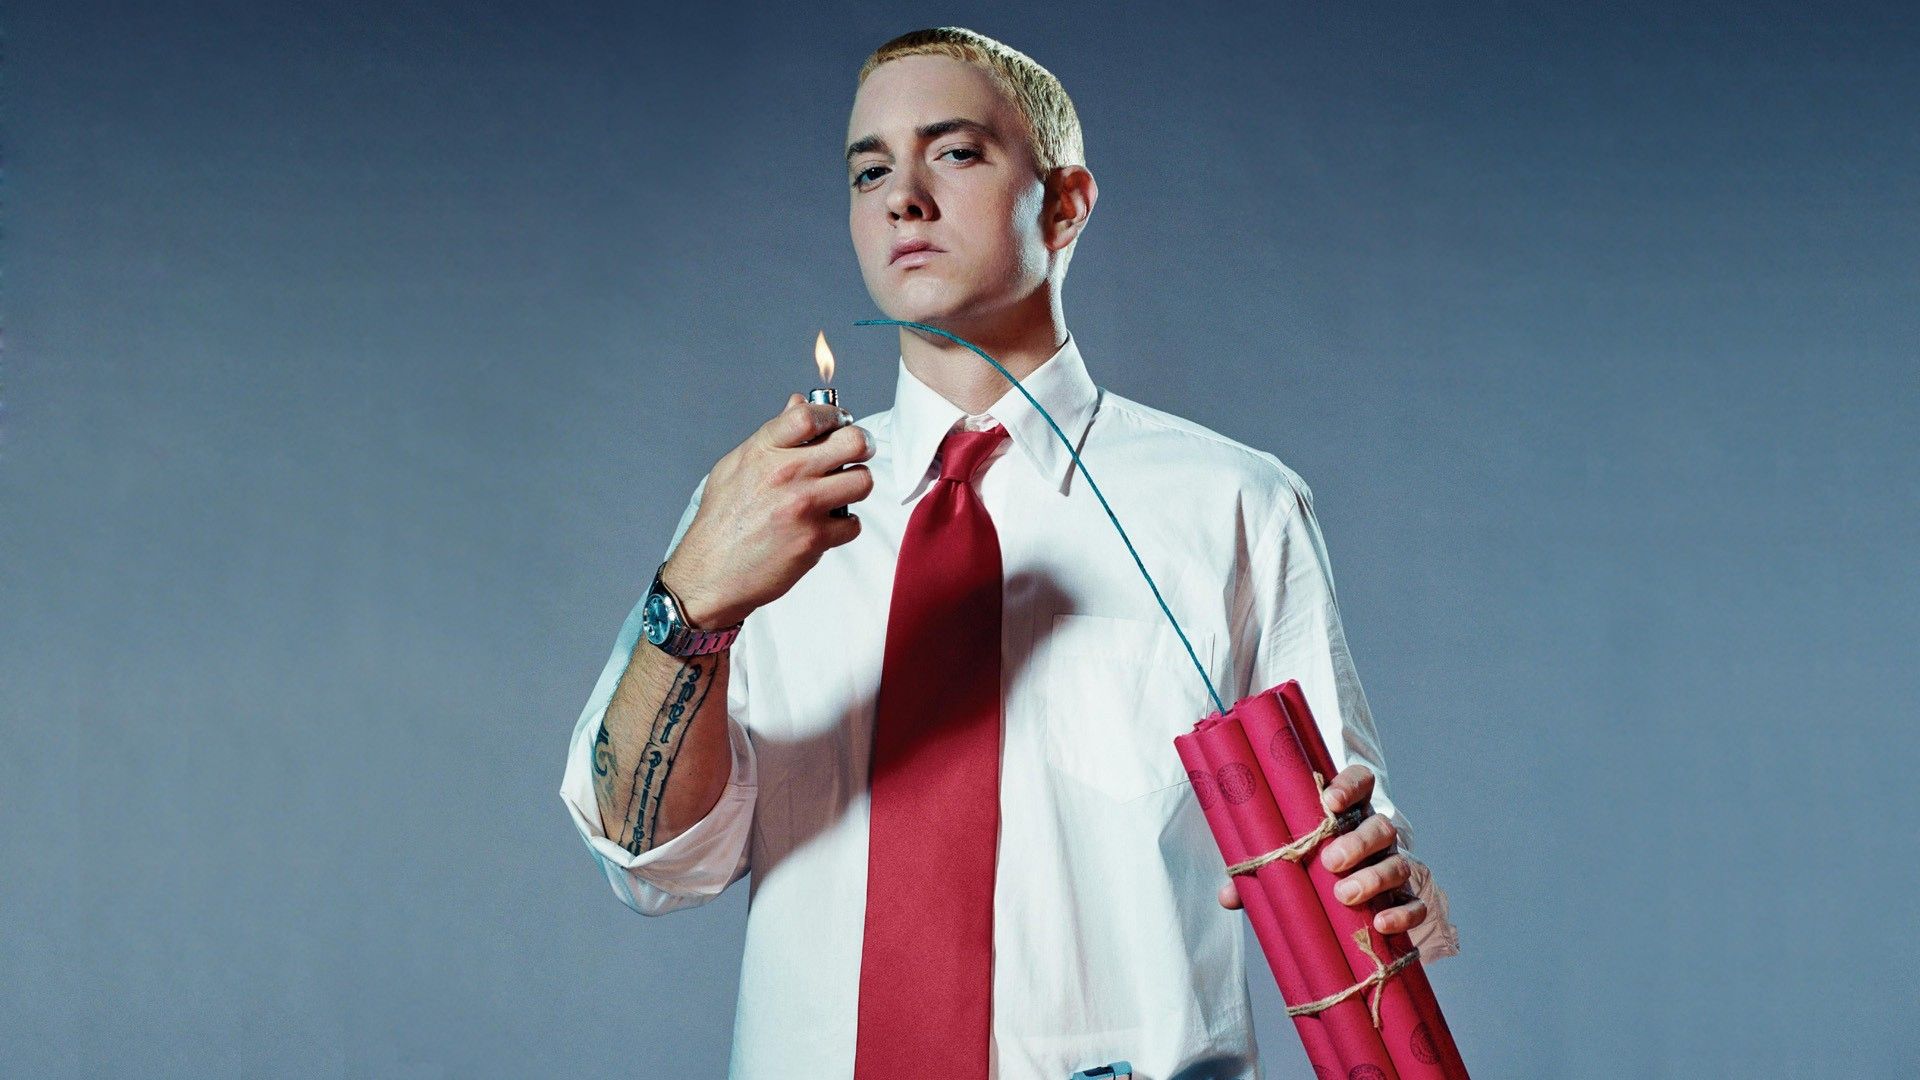 Eminem, singer, rapper, actor, 4K (horizontal)